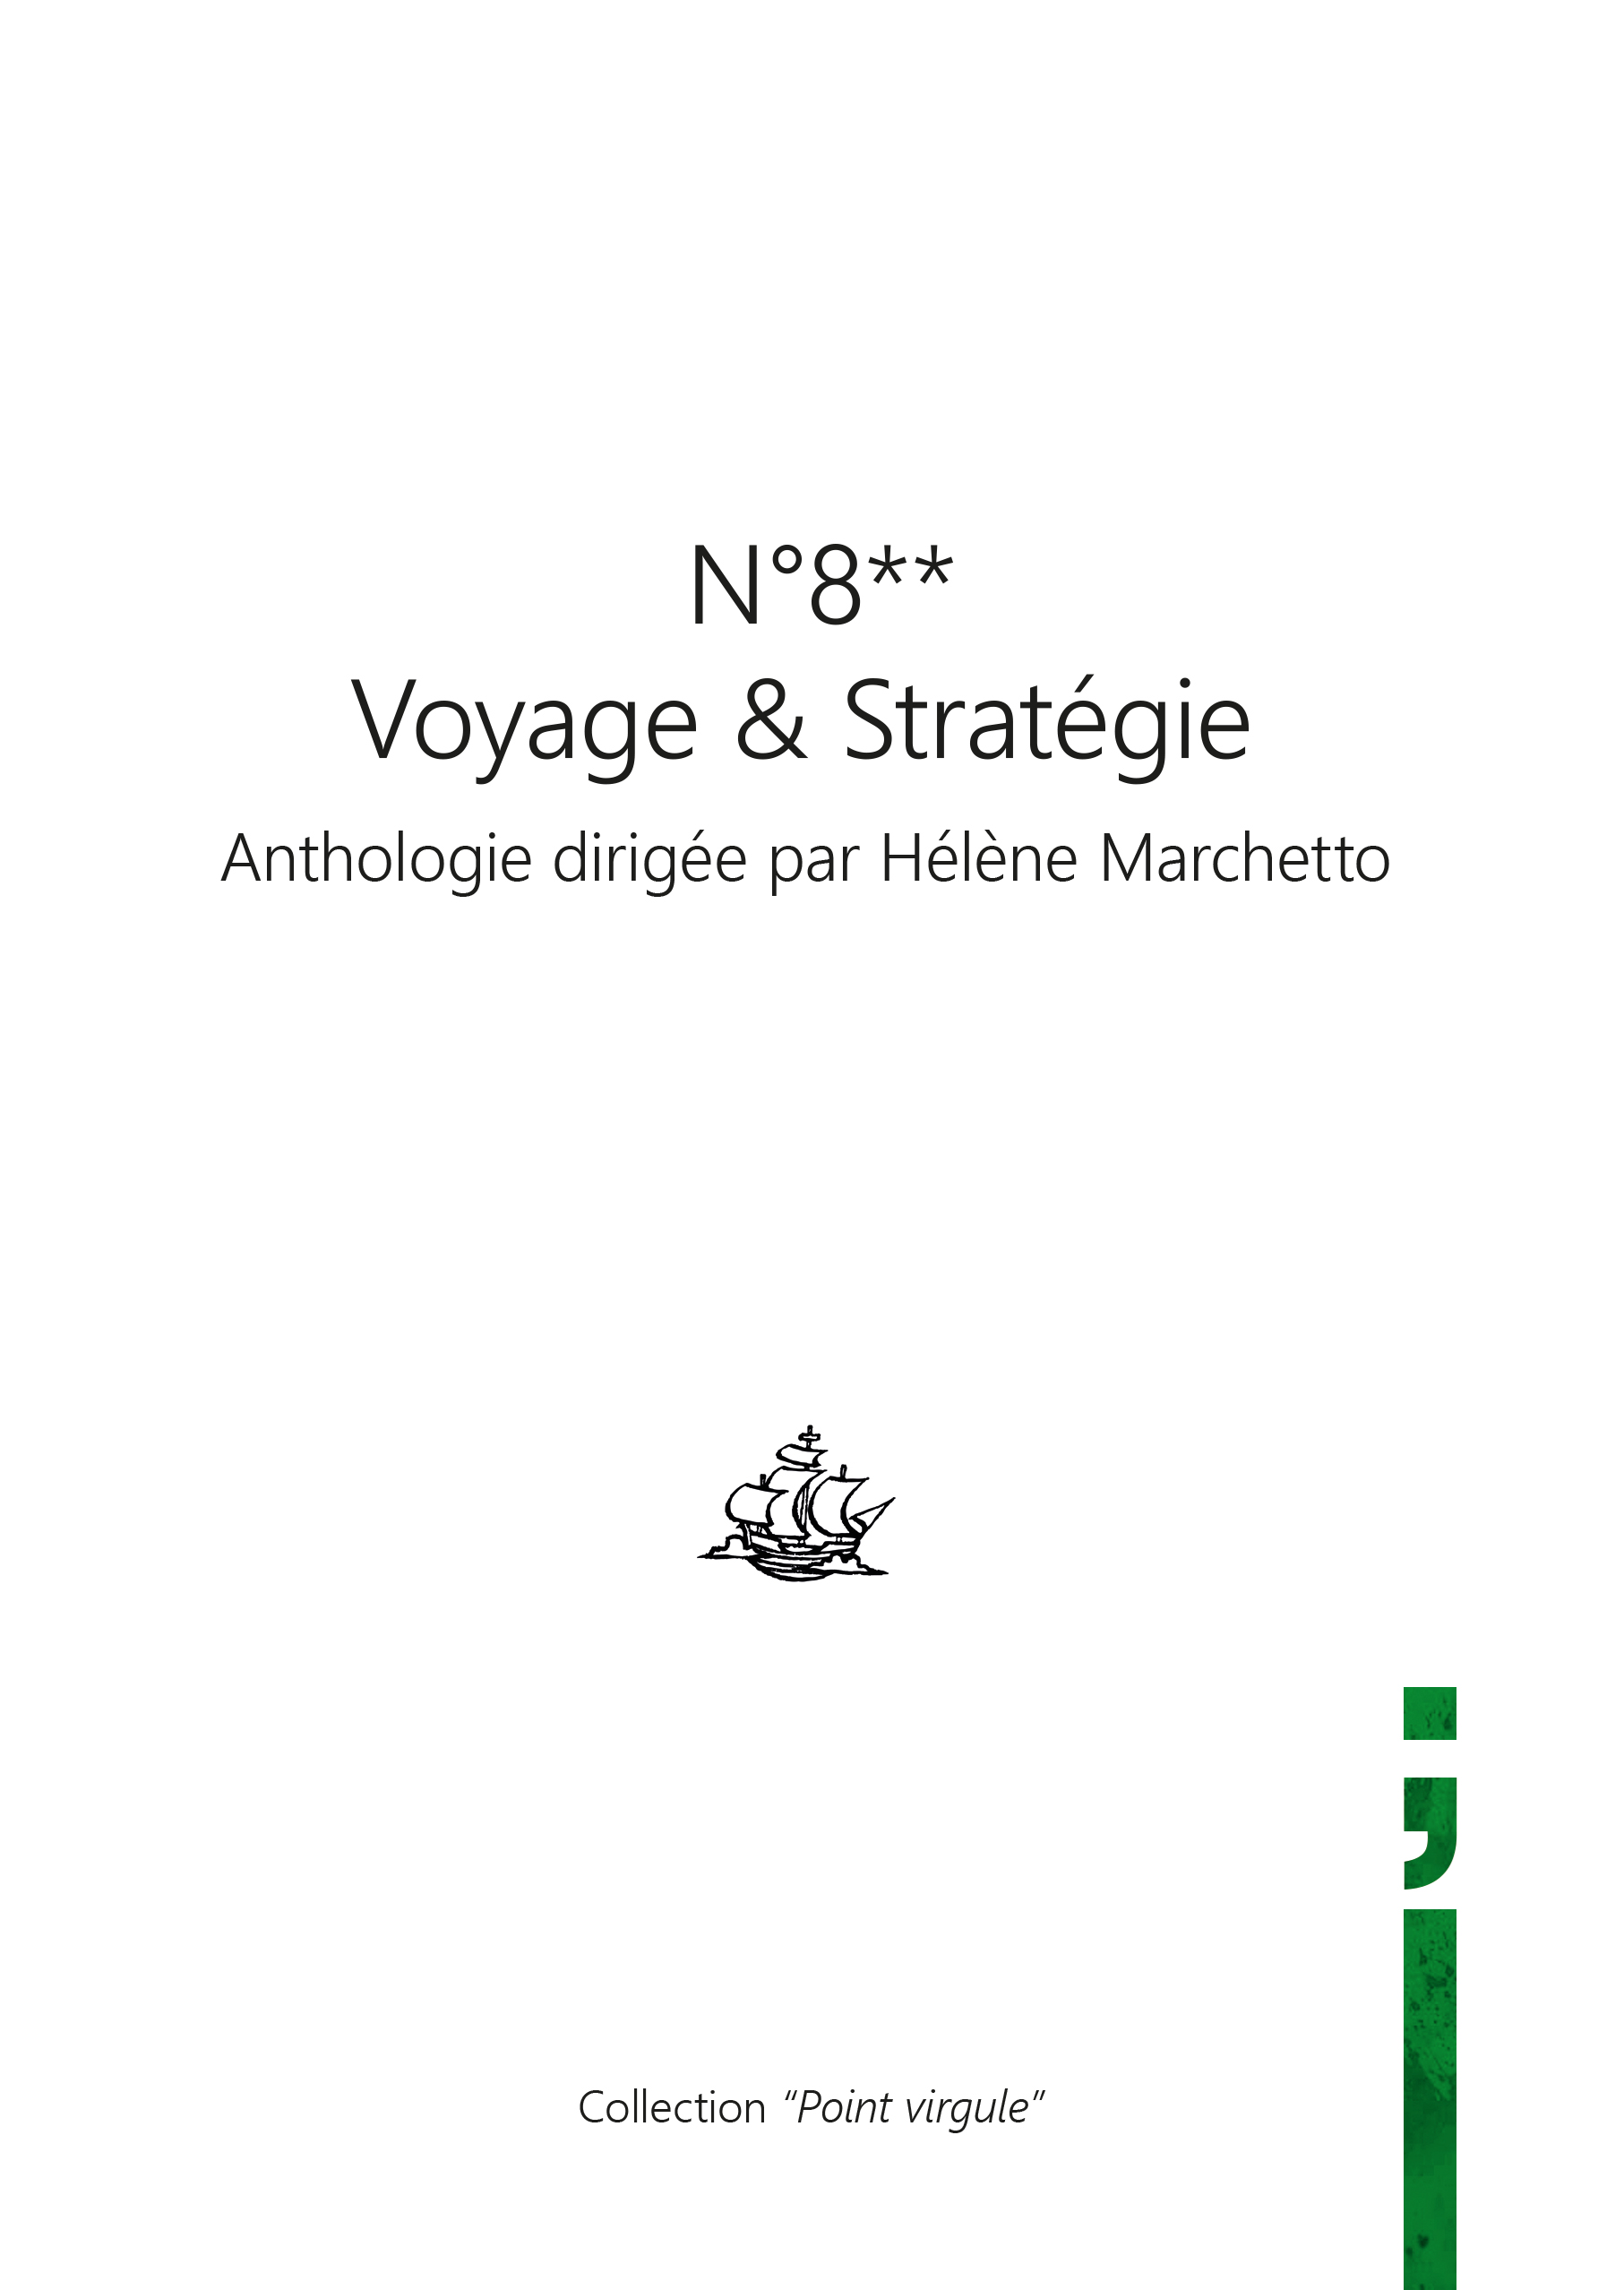 Anthologie N°8** Voyage & Stratégie